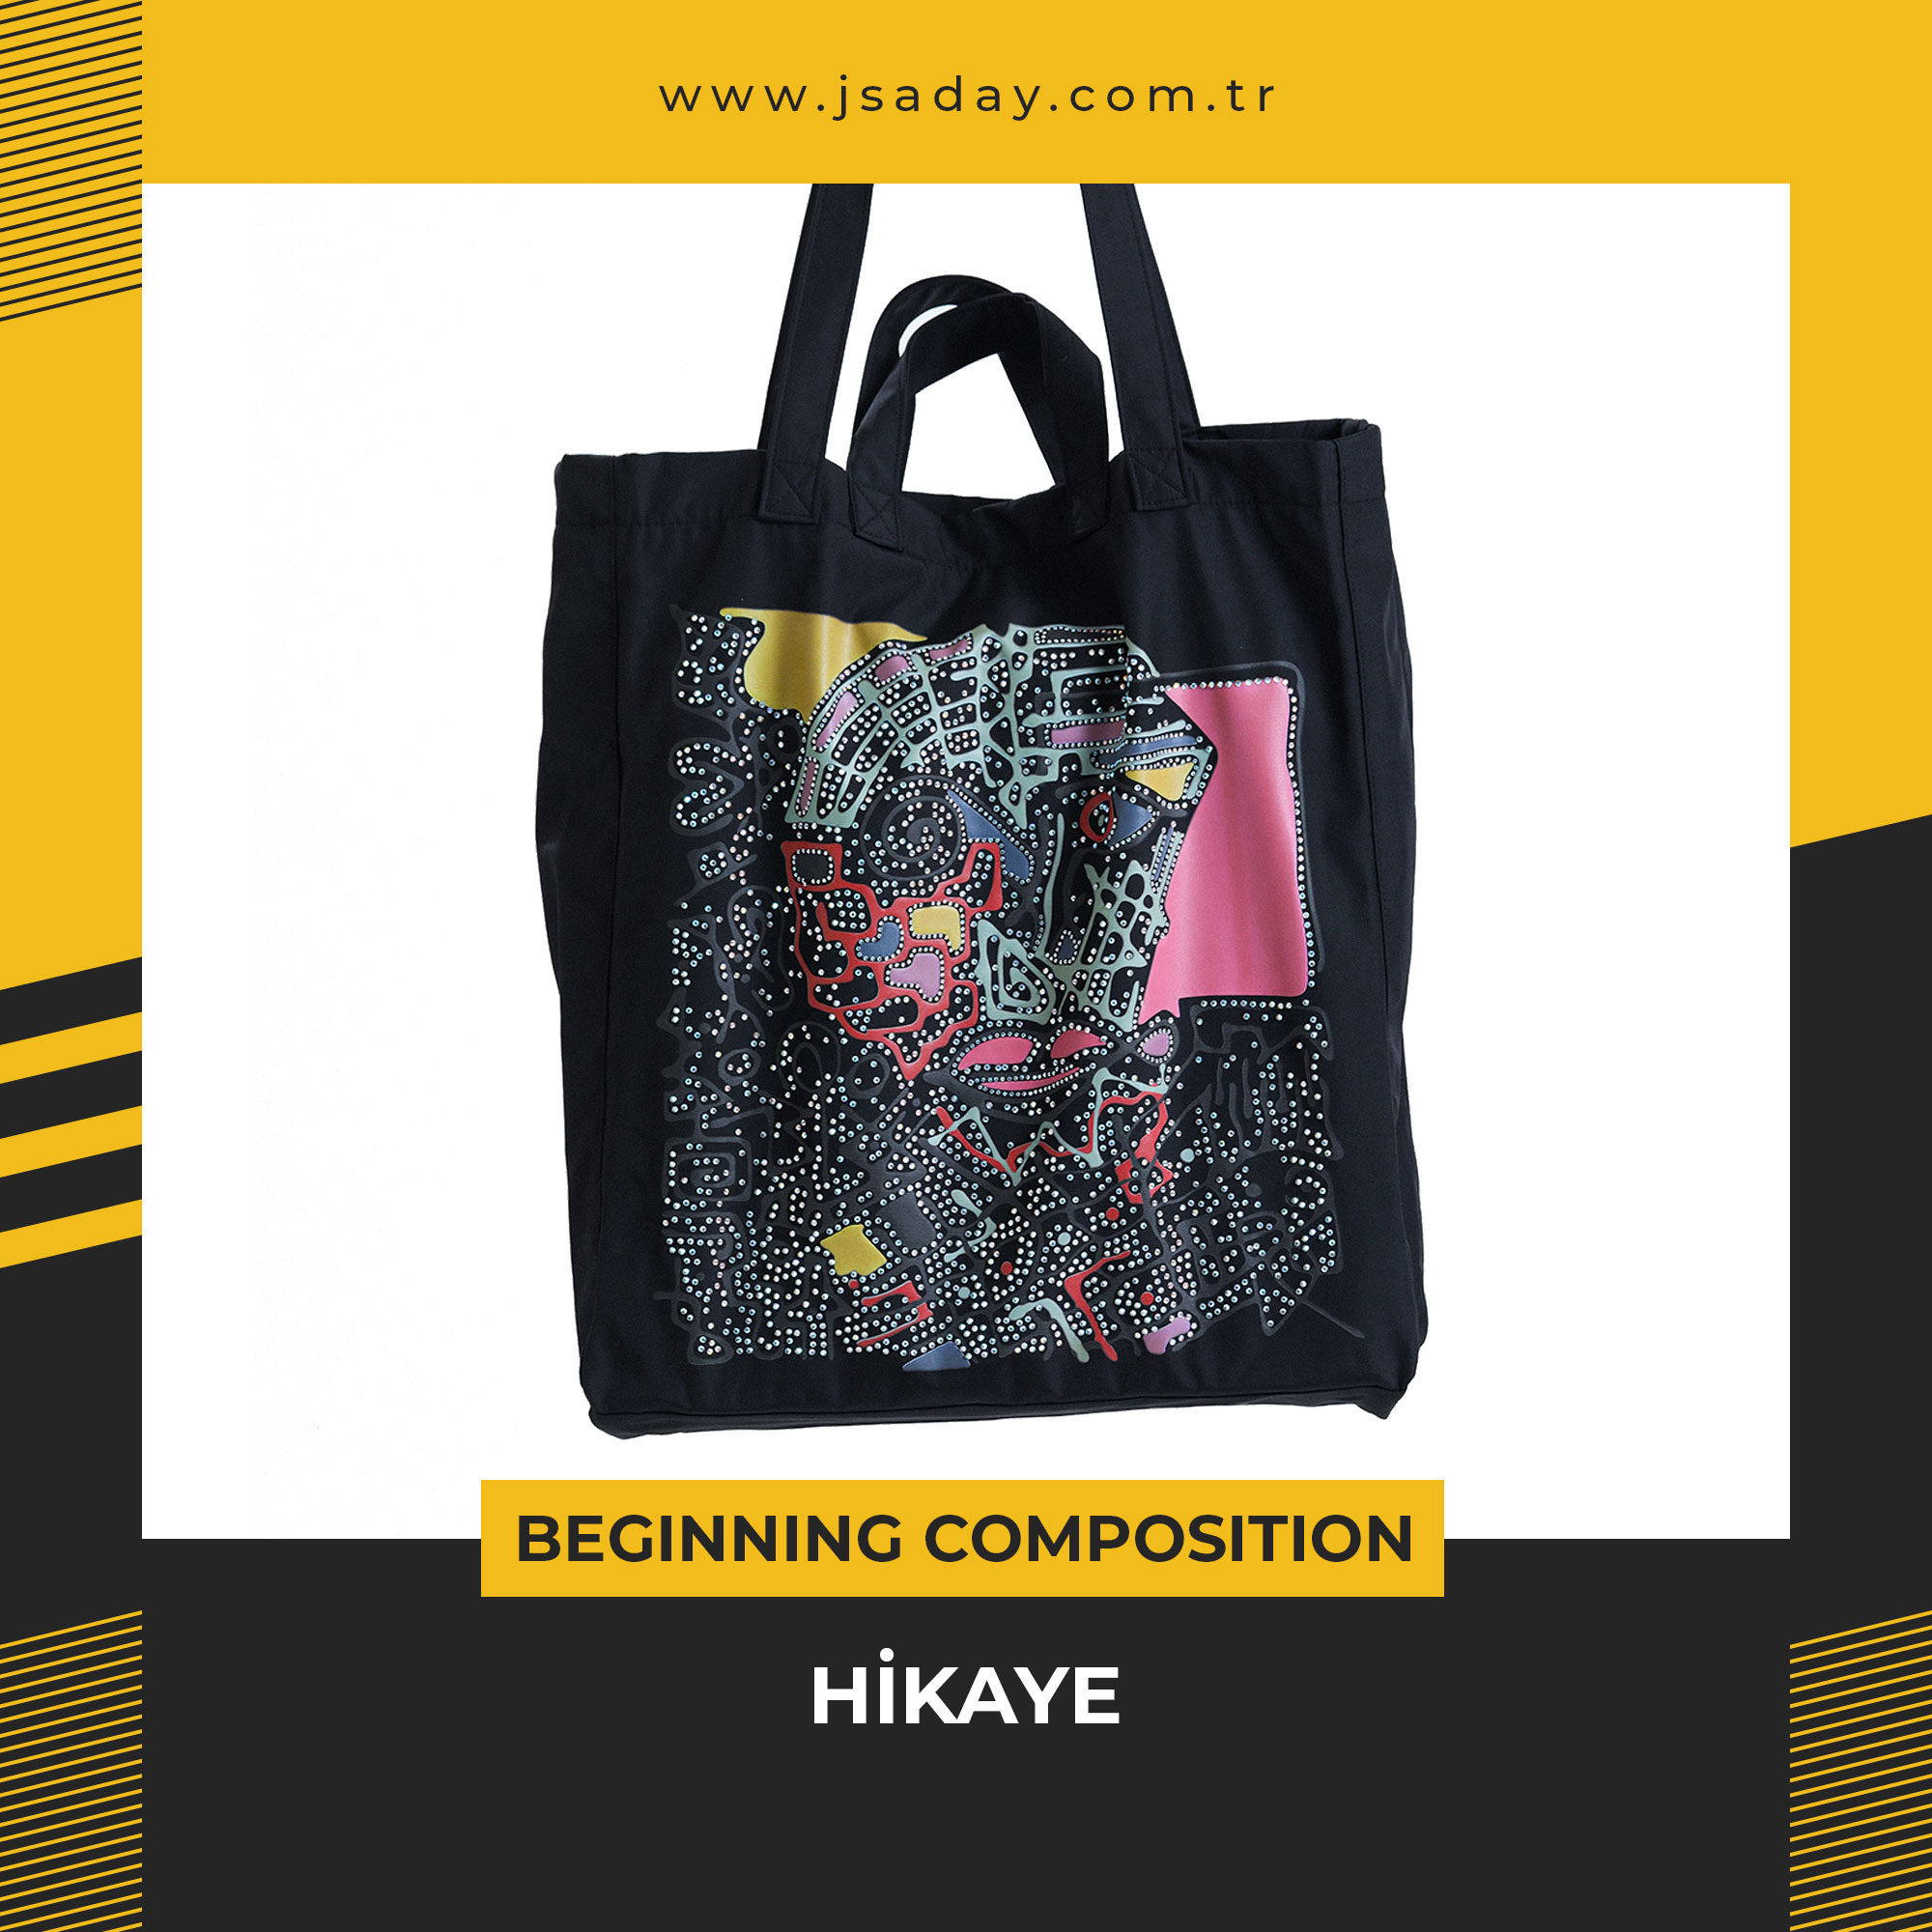 Hikaye: Beginning Composition